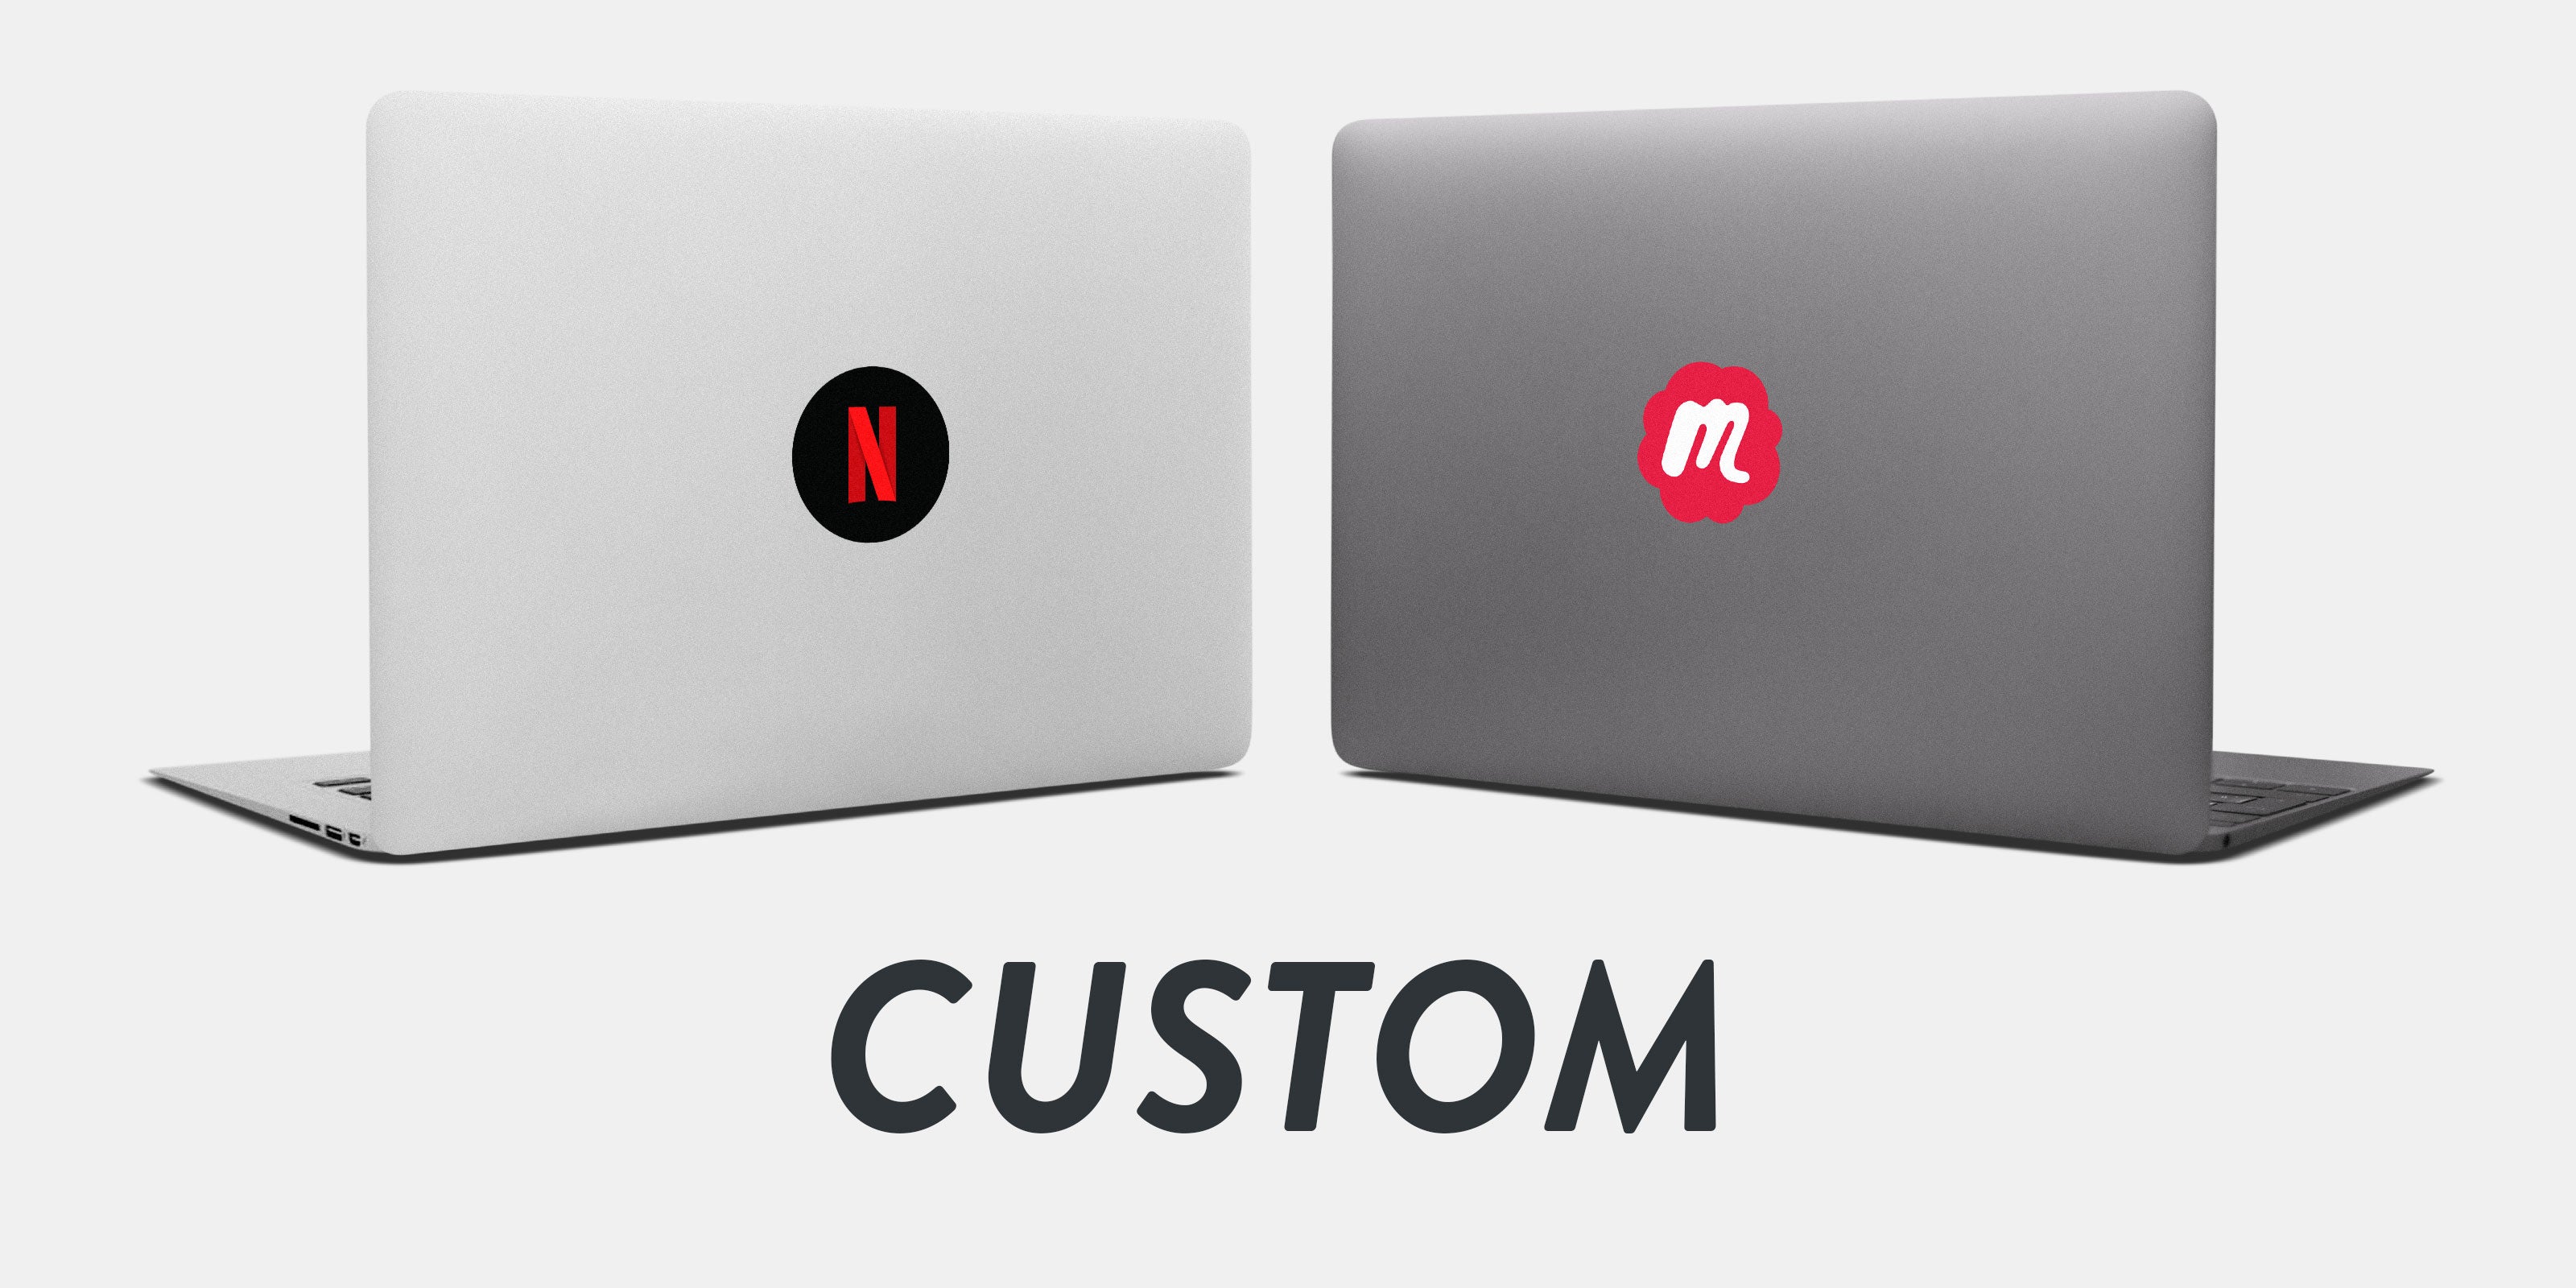 macbooks equipped with custom macbook stickers